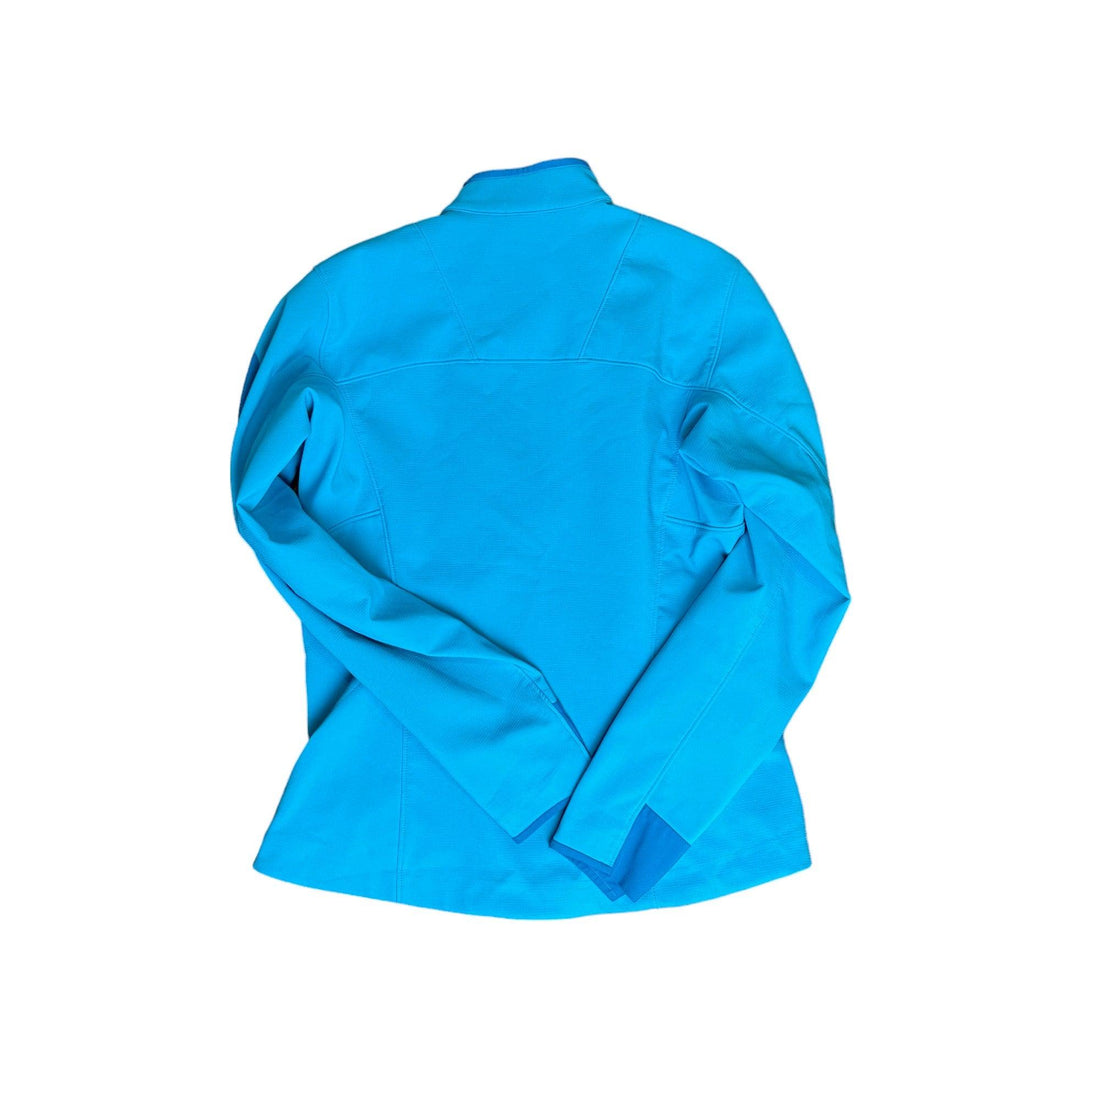 Women’s Vintage Blue Arc'Teryx Jacket - Small - The Streetwear Studio